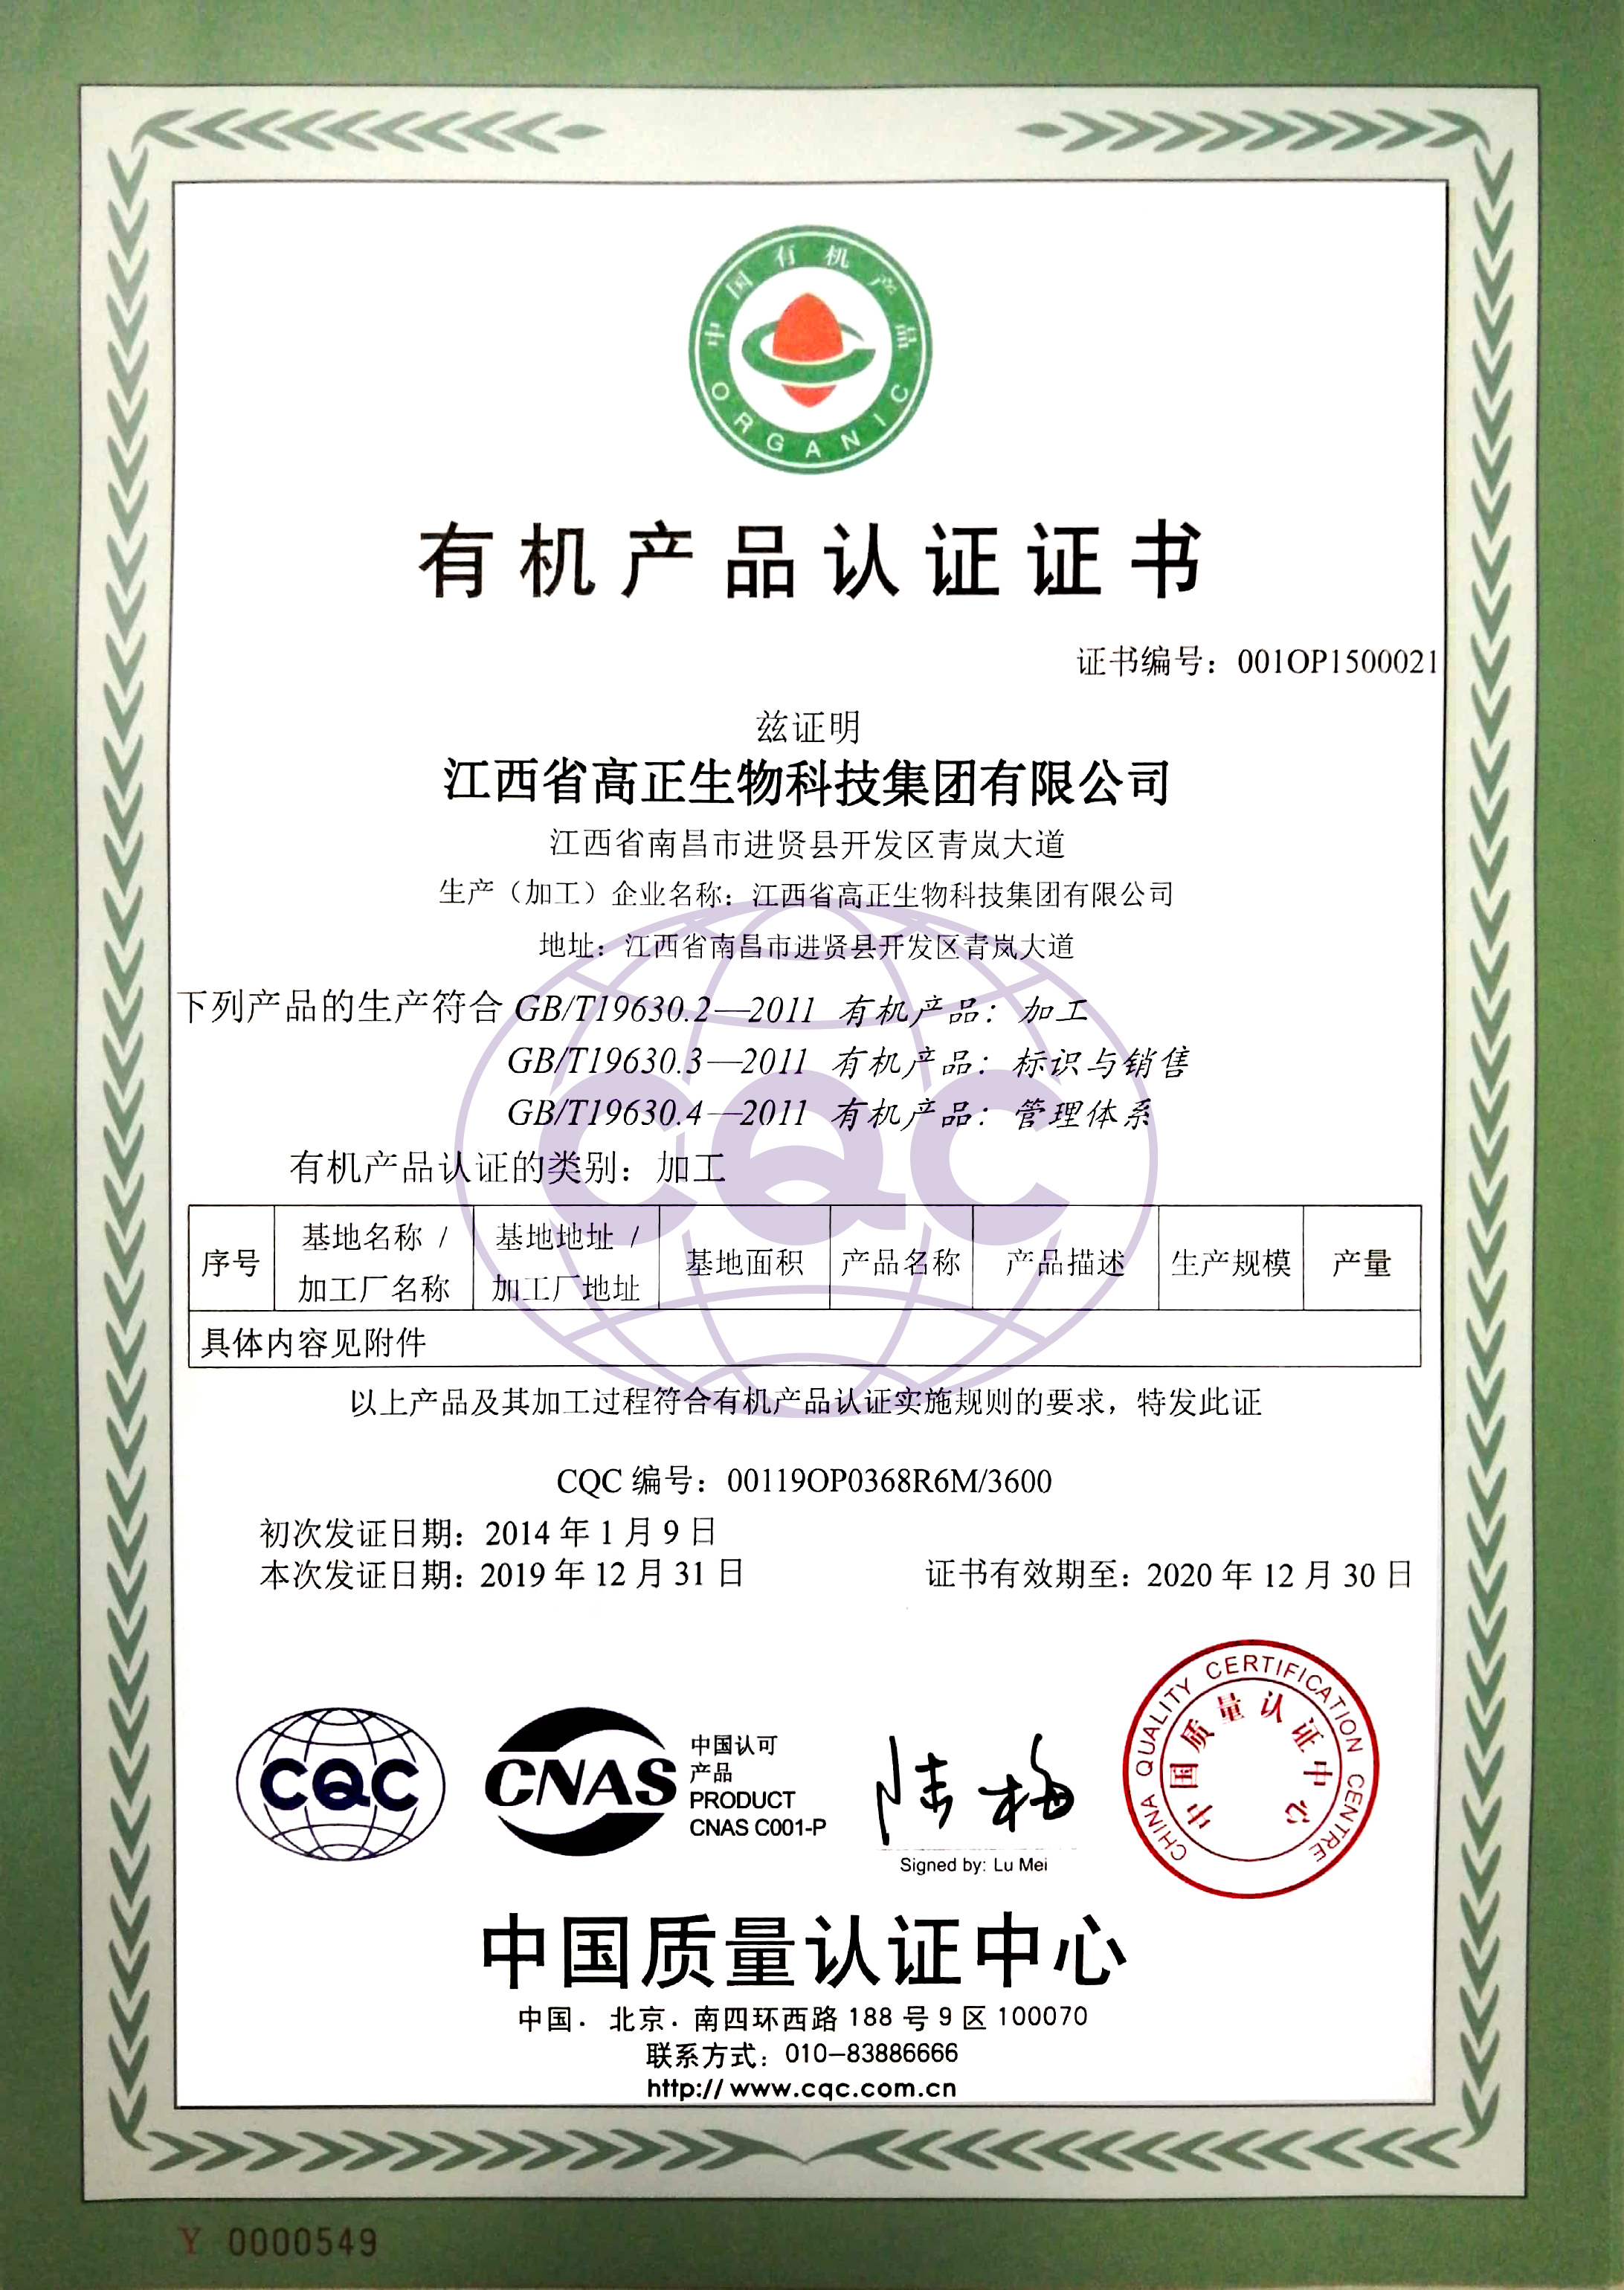 Processed Organic Certificate